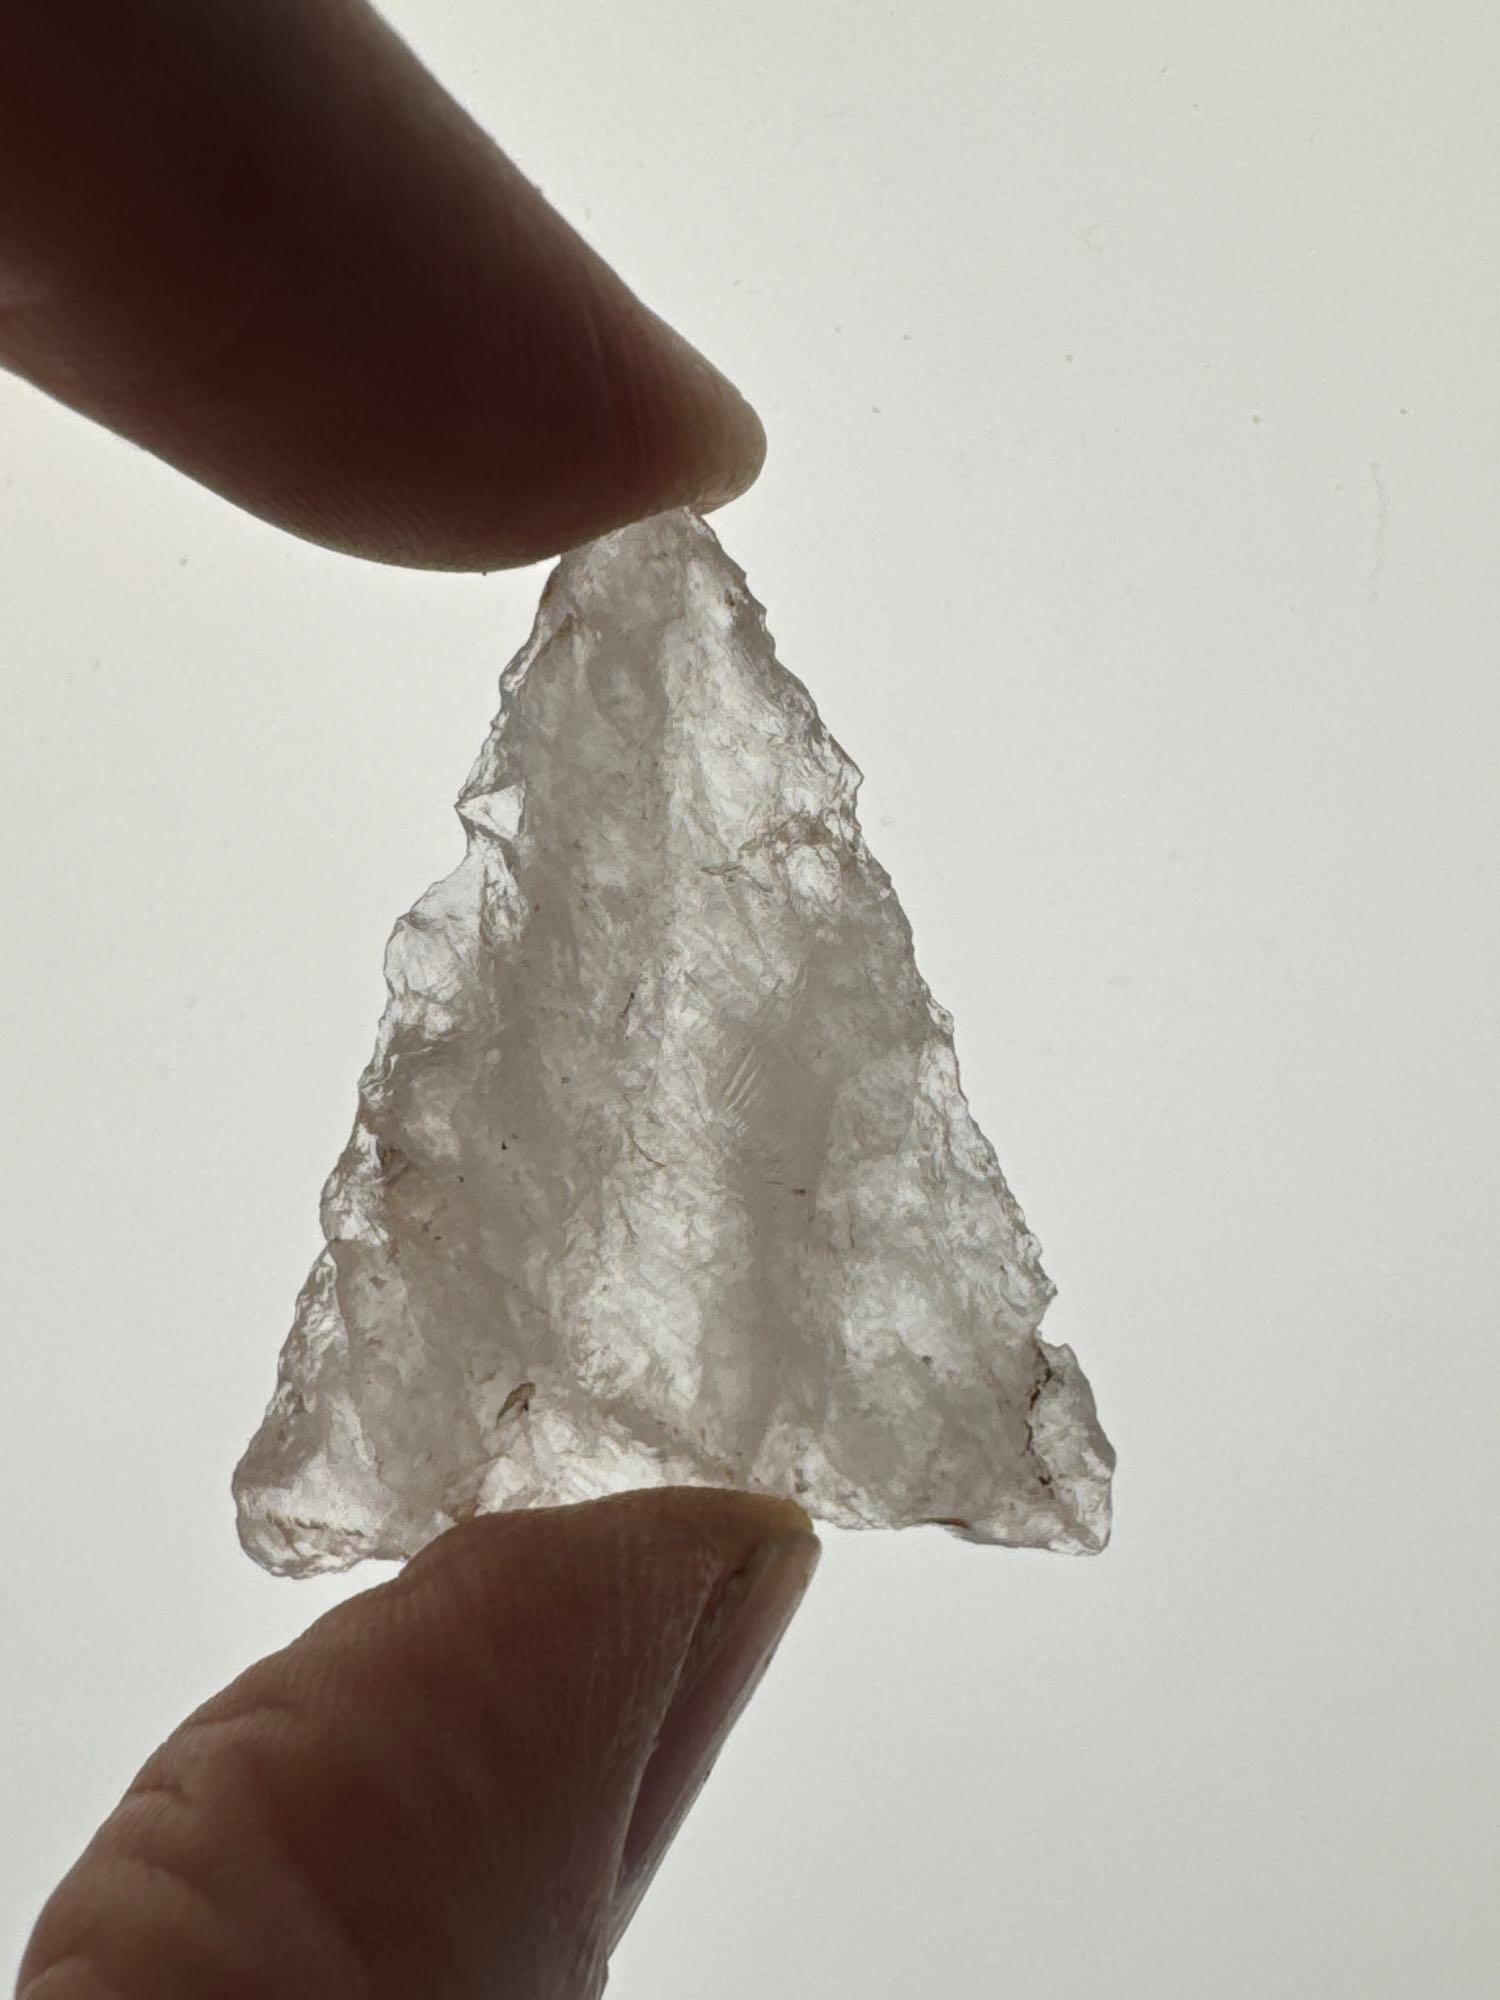 SUPERB Semi-Translucent Quartz Crystalline Triangle Point, 1 3/8", Found in PA